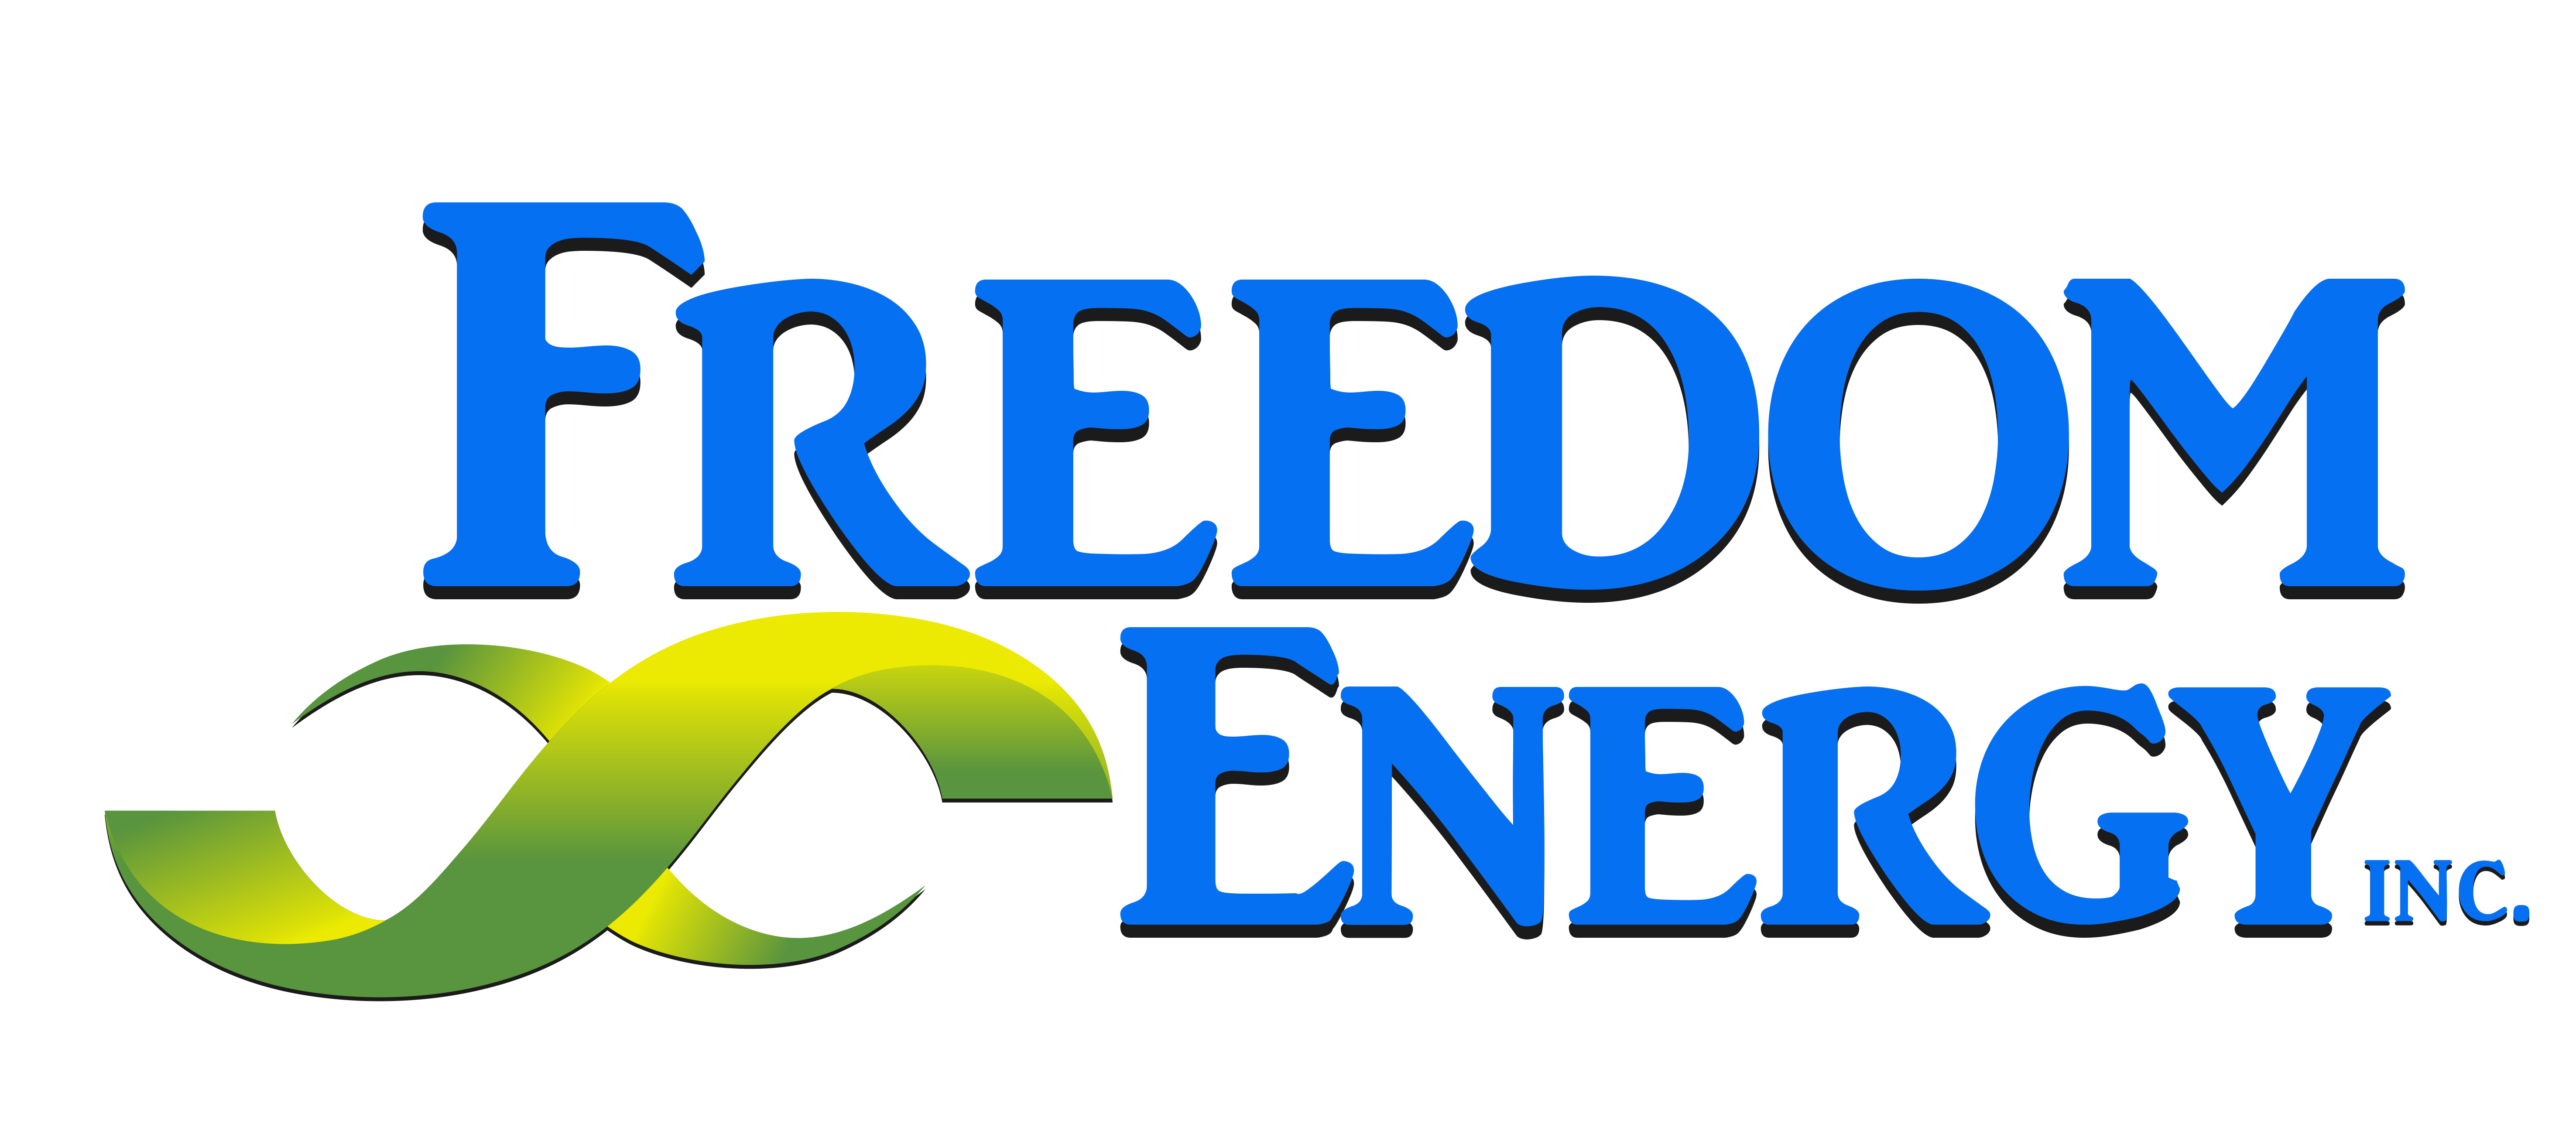 Freedom Energy